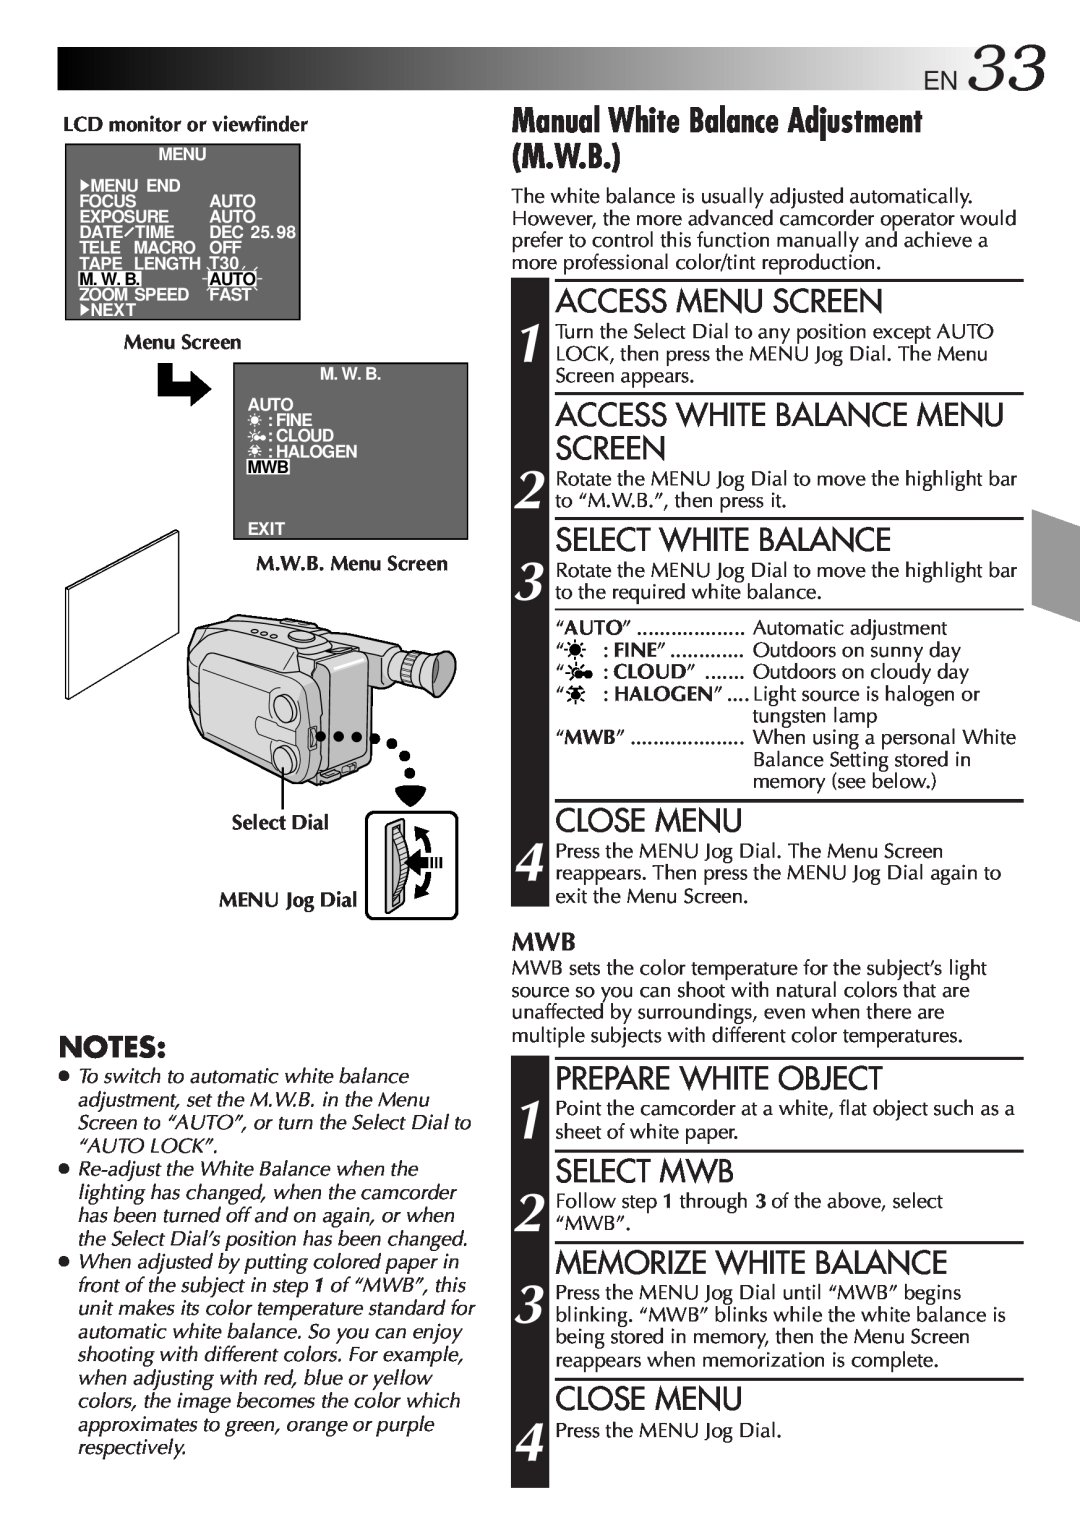 JVC GR-AXM100 Manual White Balance Adjustment M.W.B, Access Menu Screen, Access White Balance Menu Screen, Close Menu 